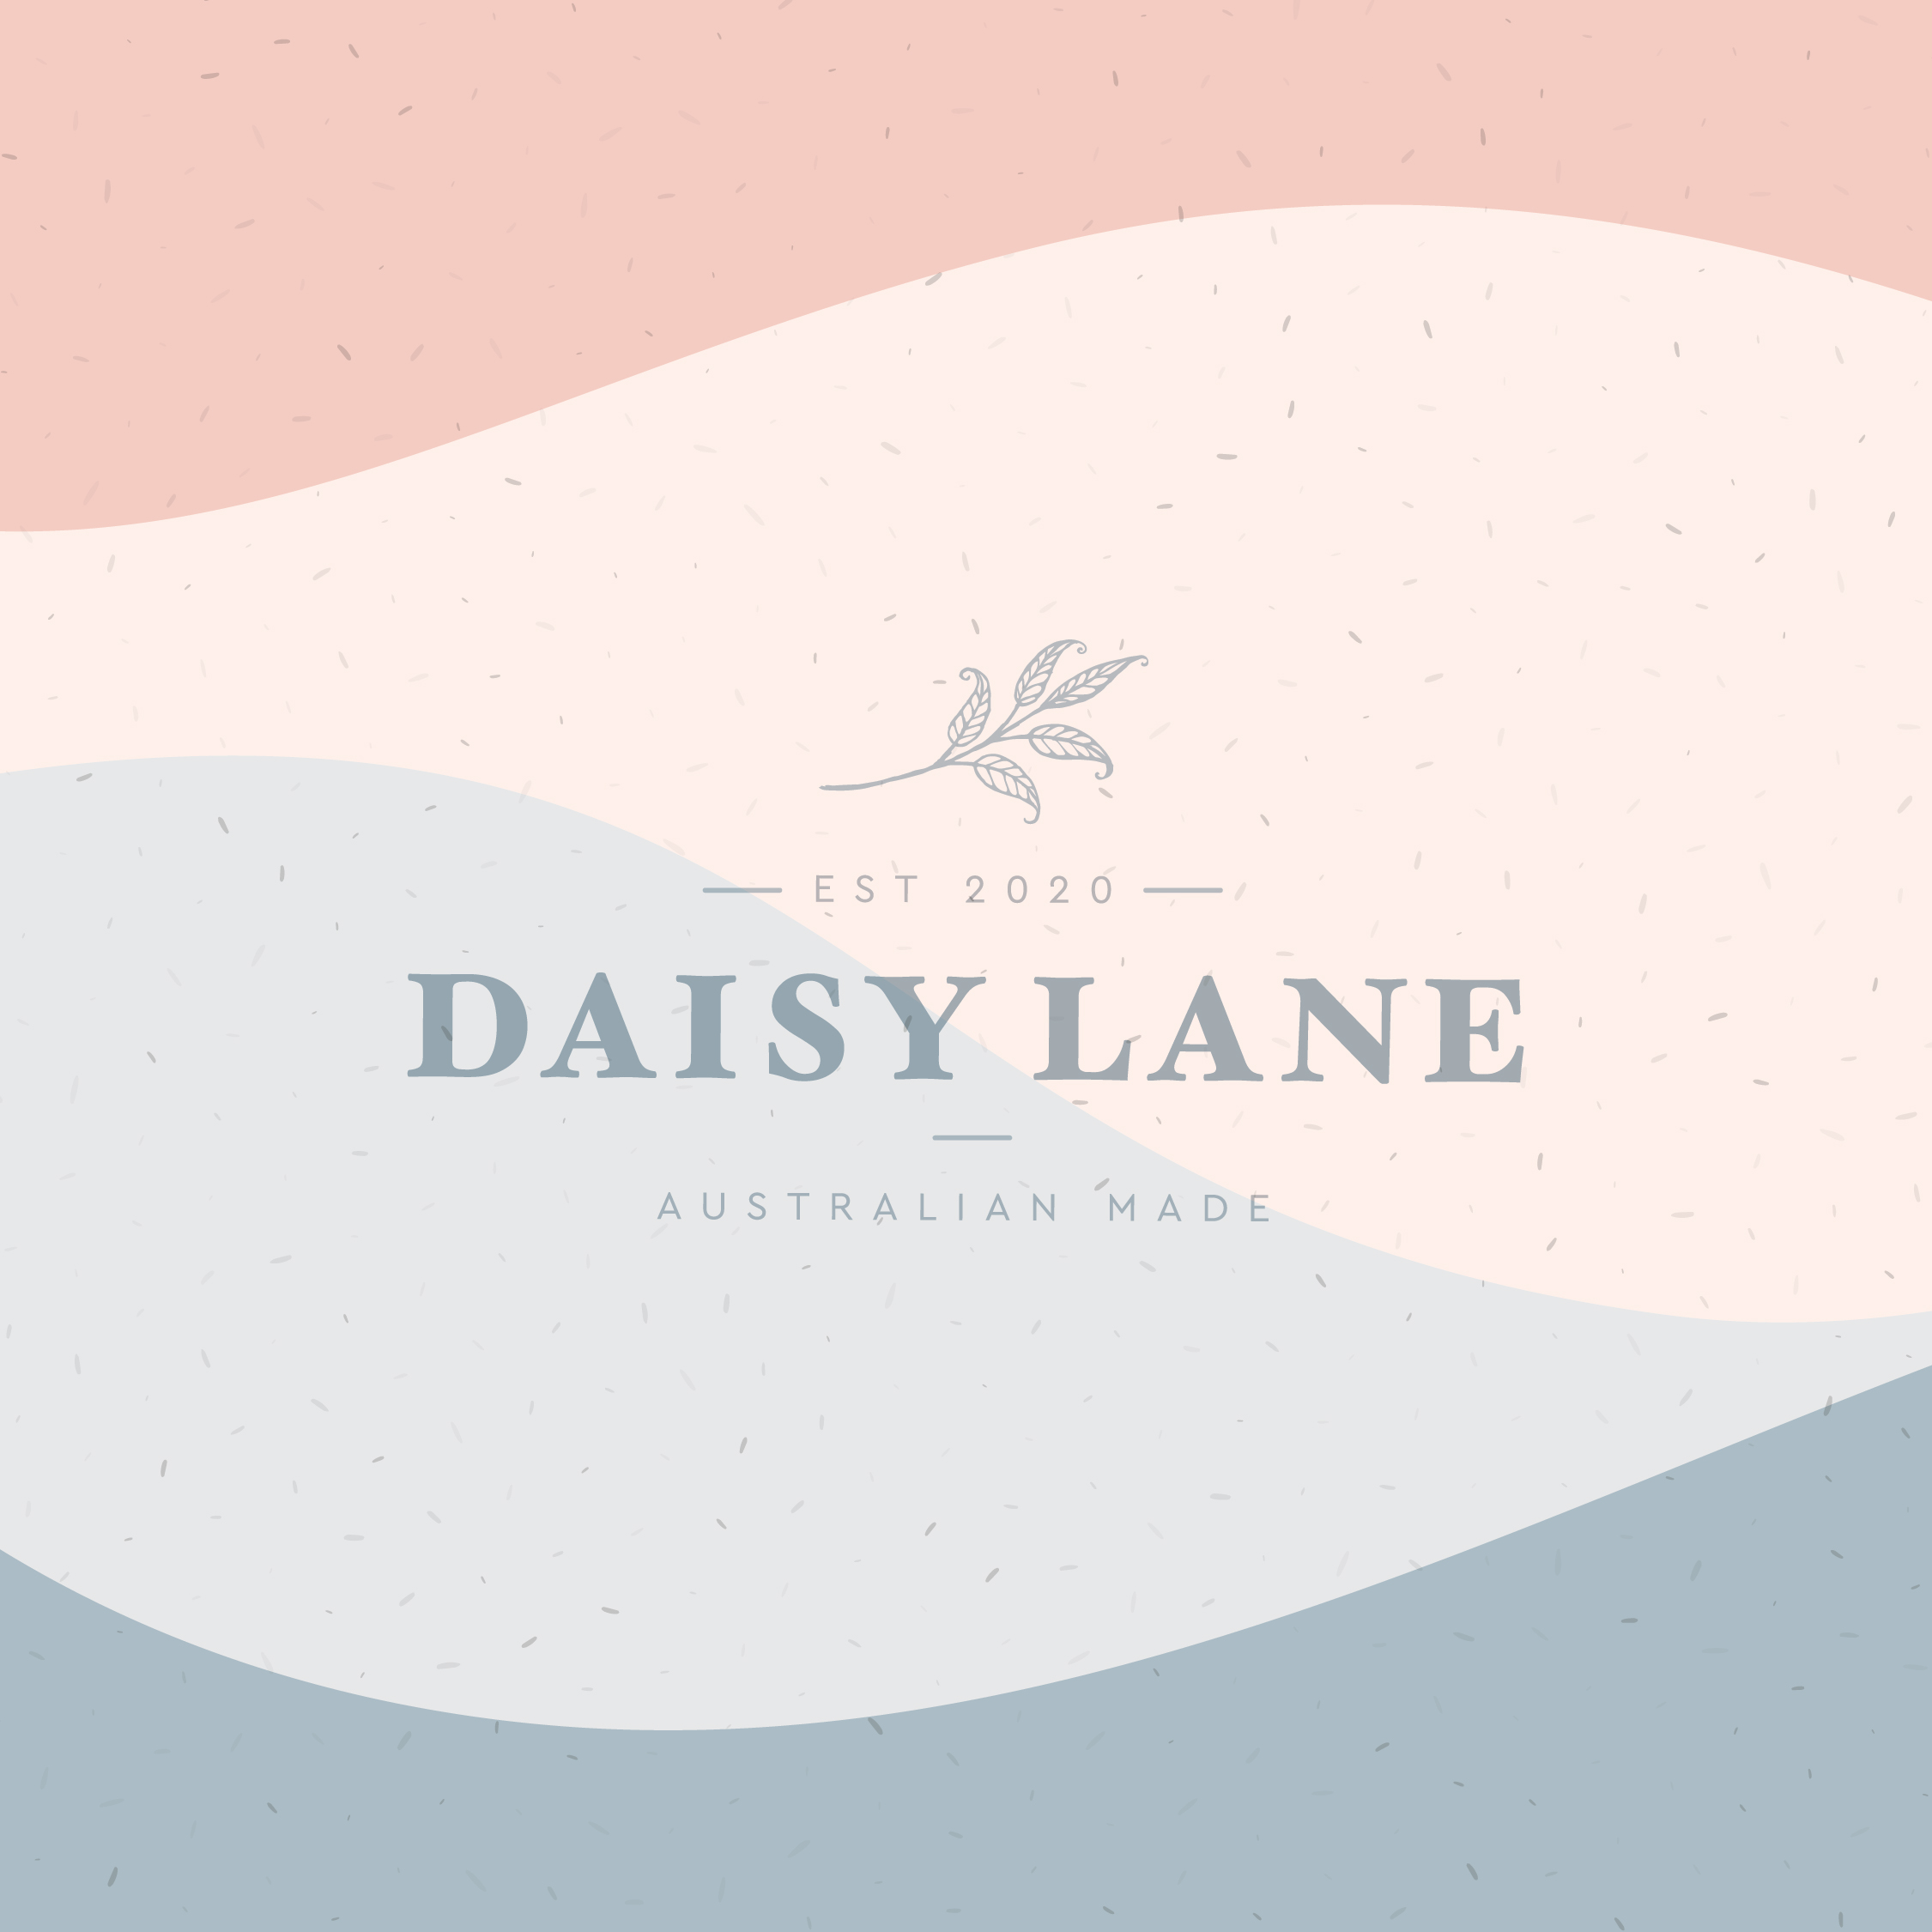 Daisy Lane